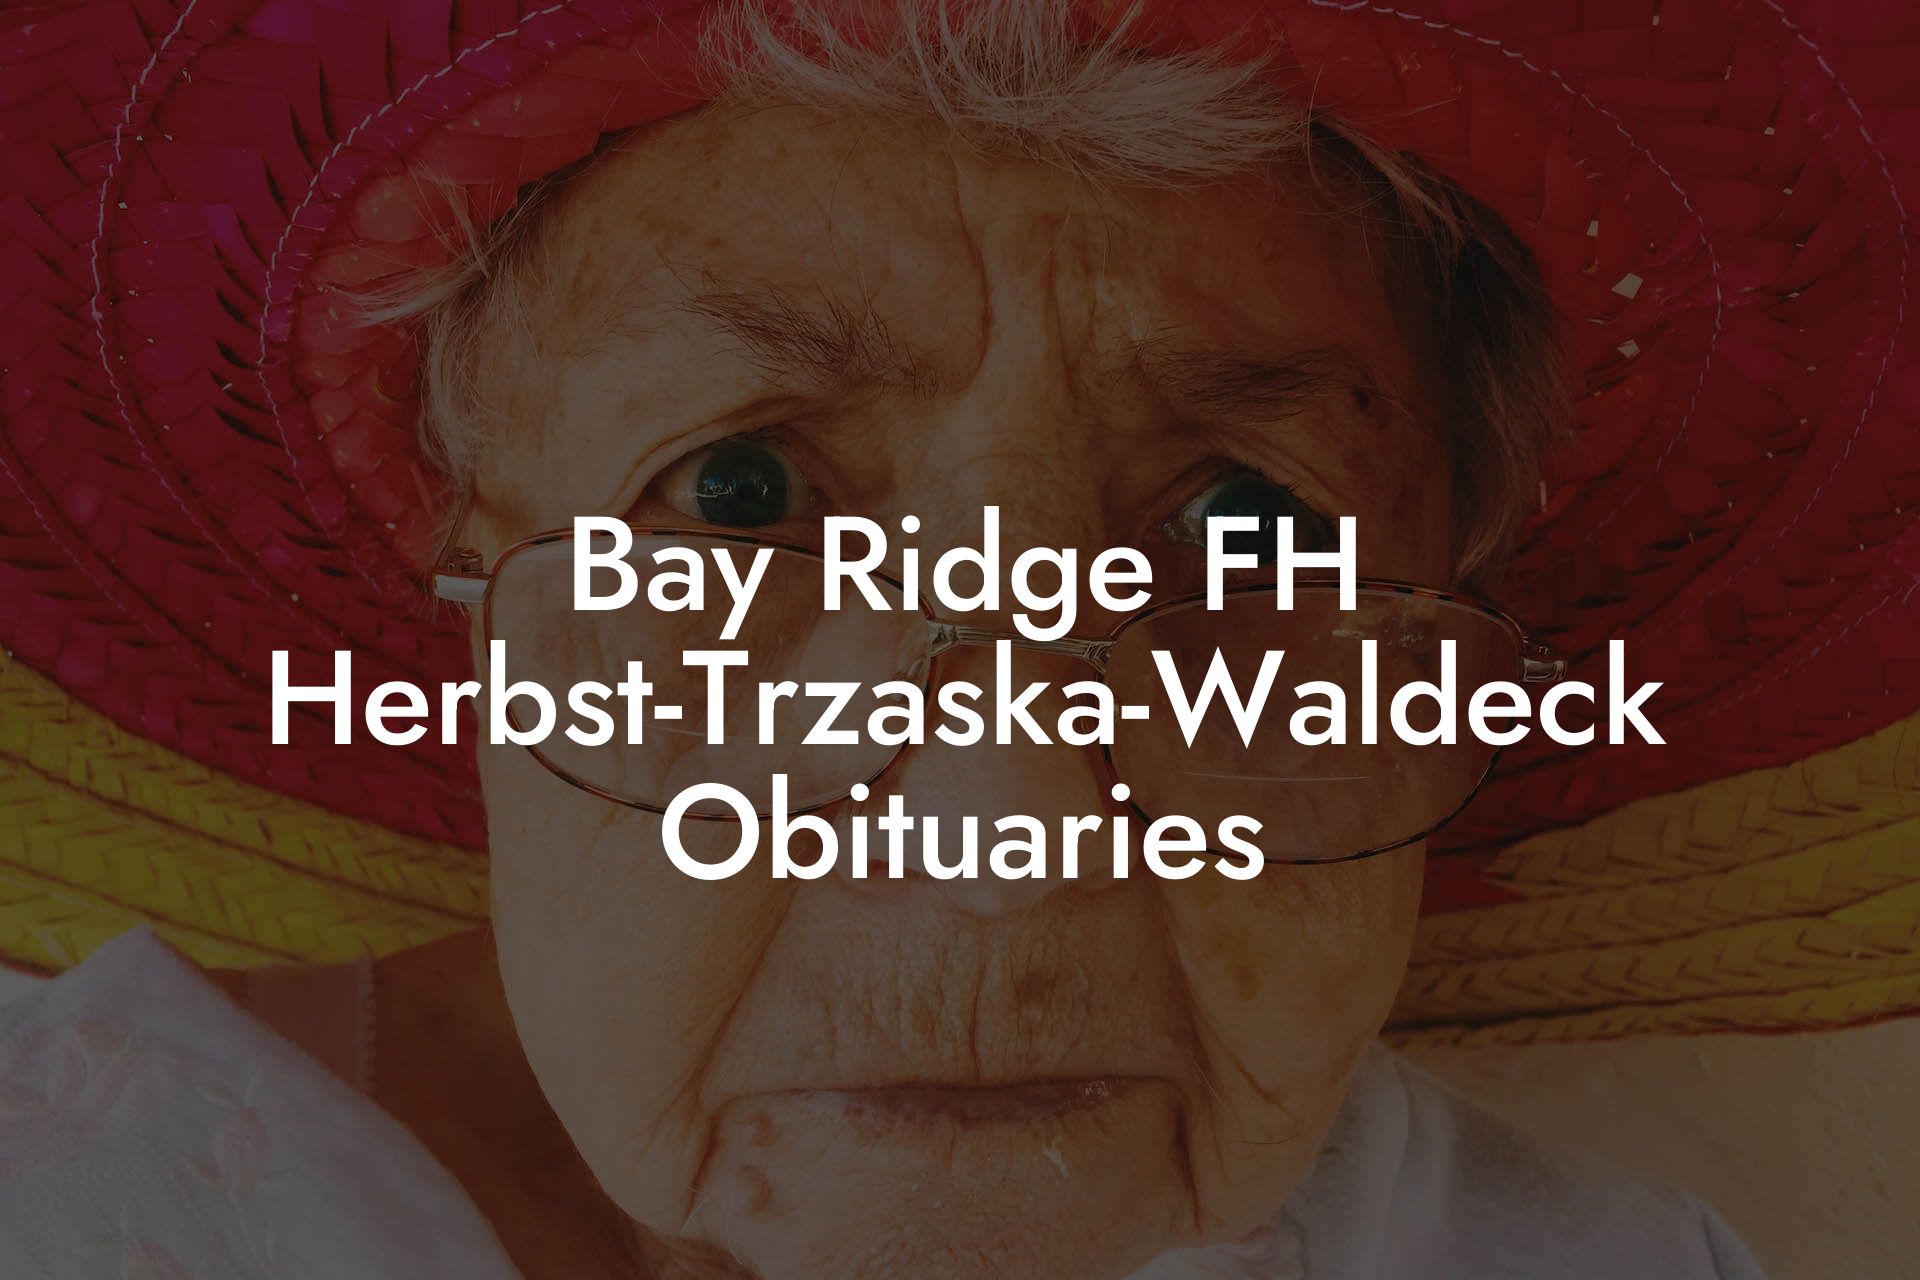 Bay Ridge FH Herbst-Trzaska-Waldeck Obituaries